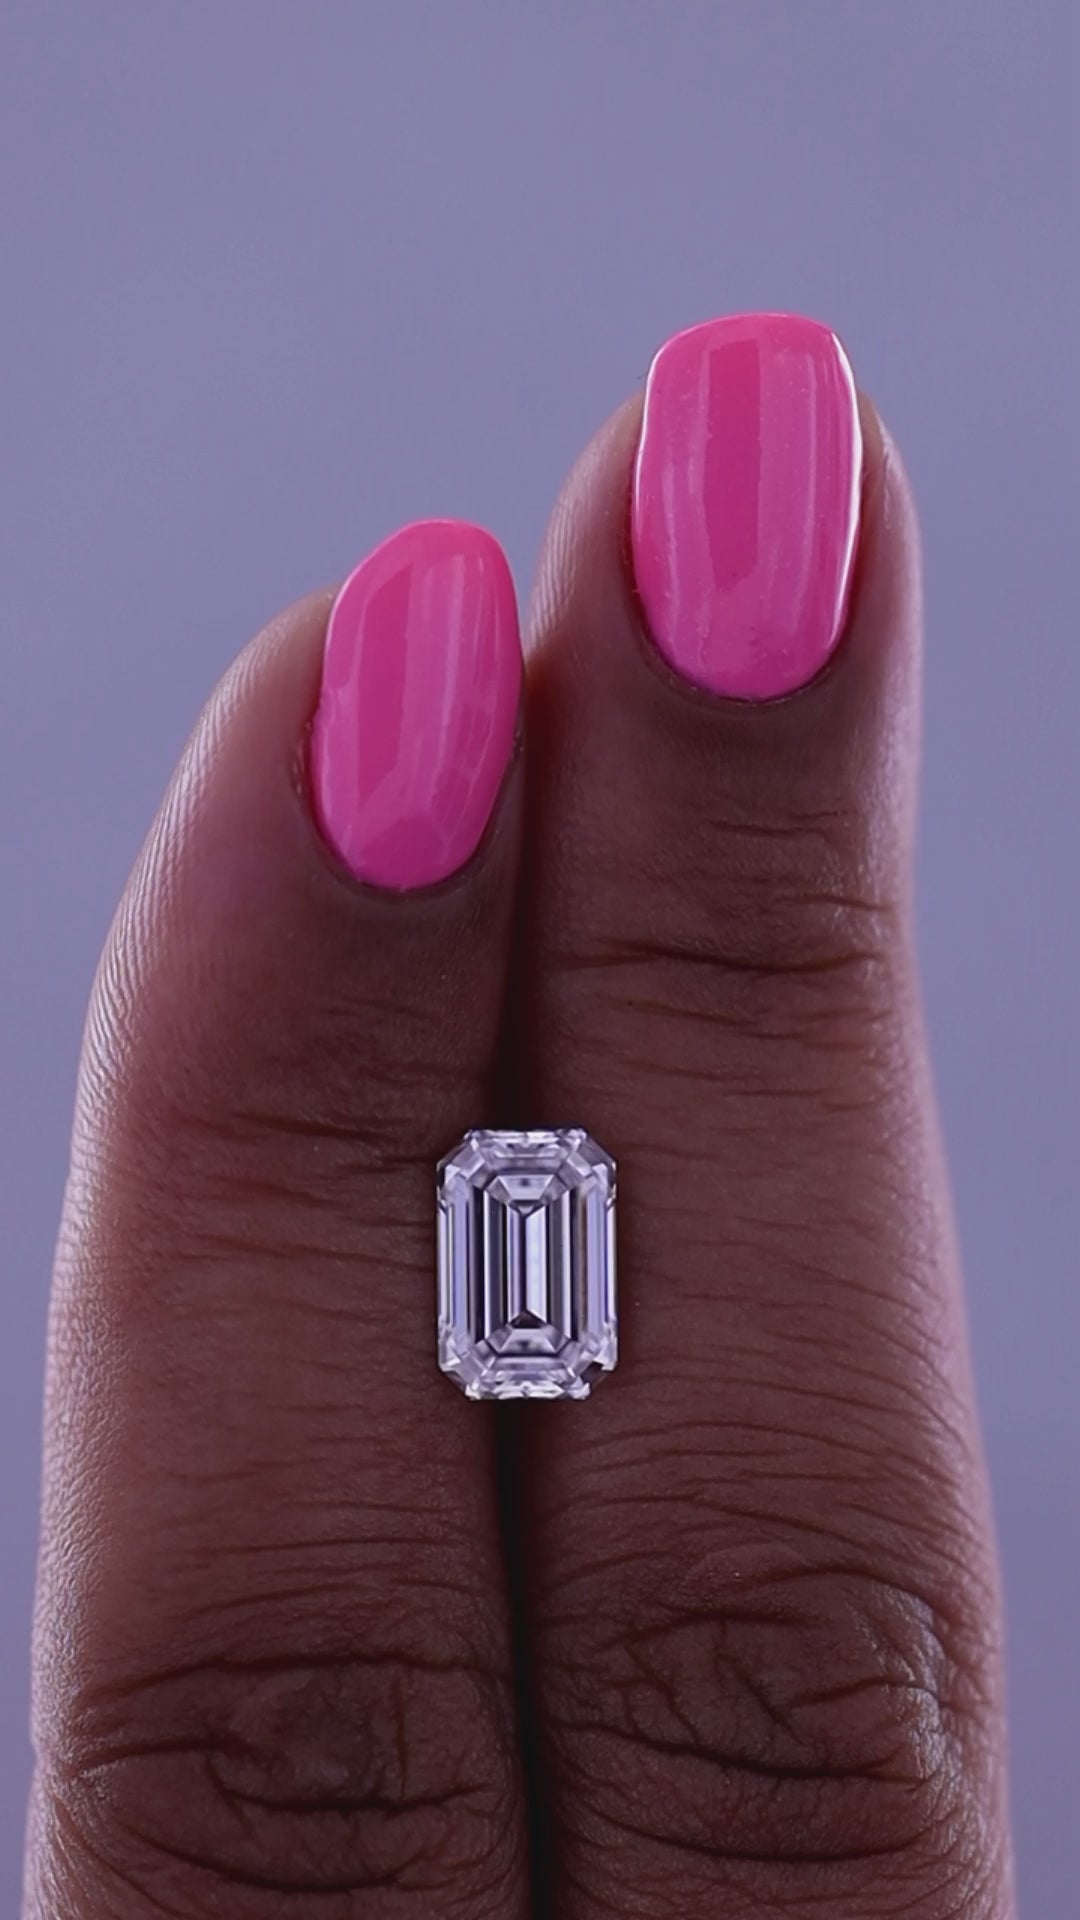 Extraordinary 3.00-Carat Joyaux™ Signature Emerald Cut Diamond D FL - the choice of true connoisseurs of rarity